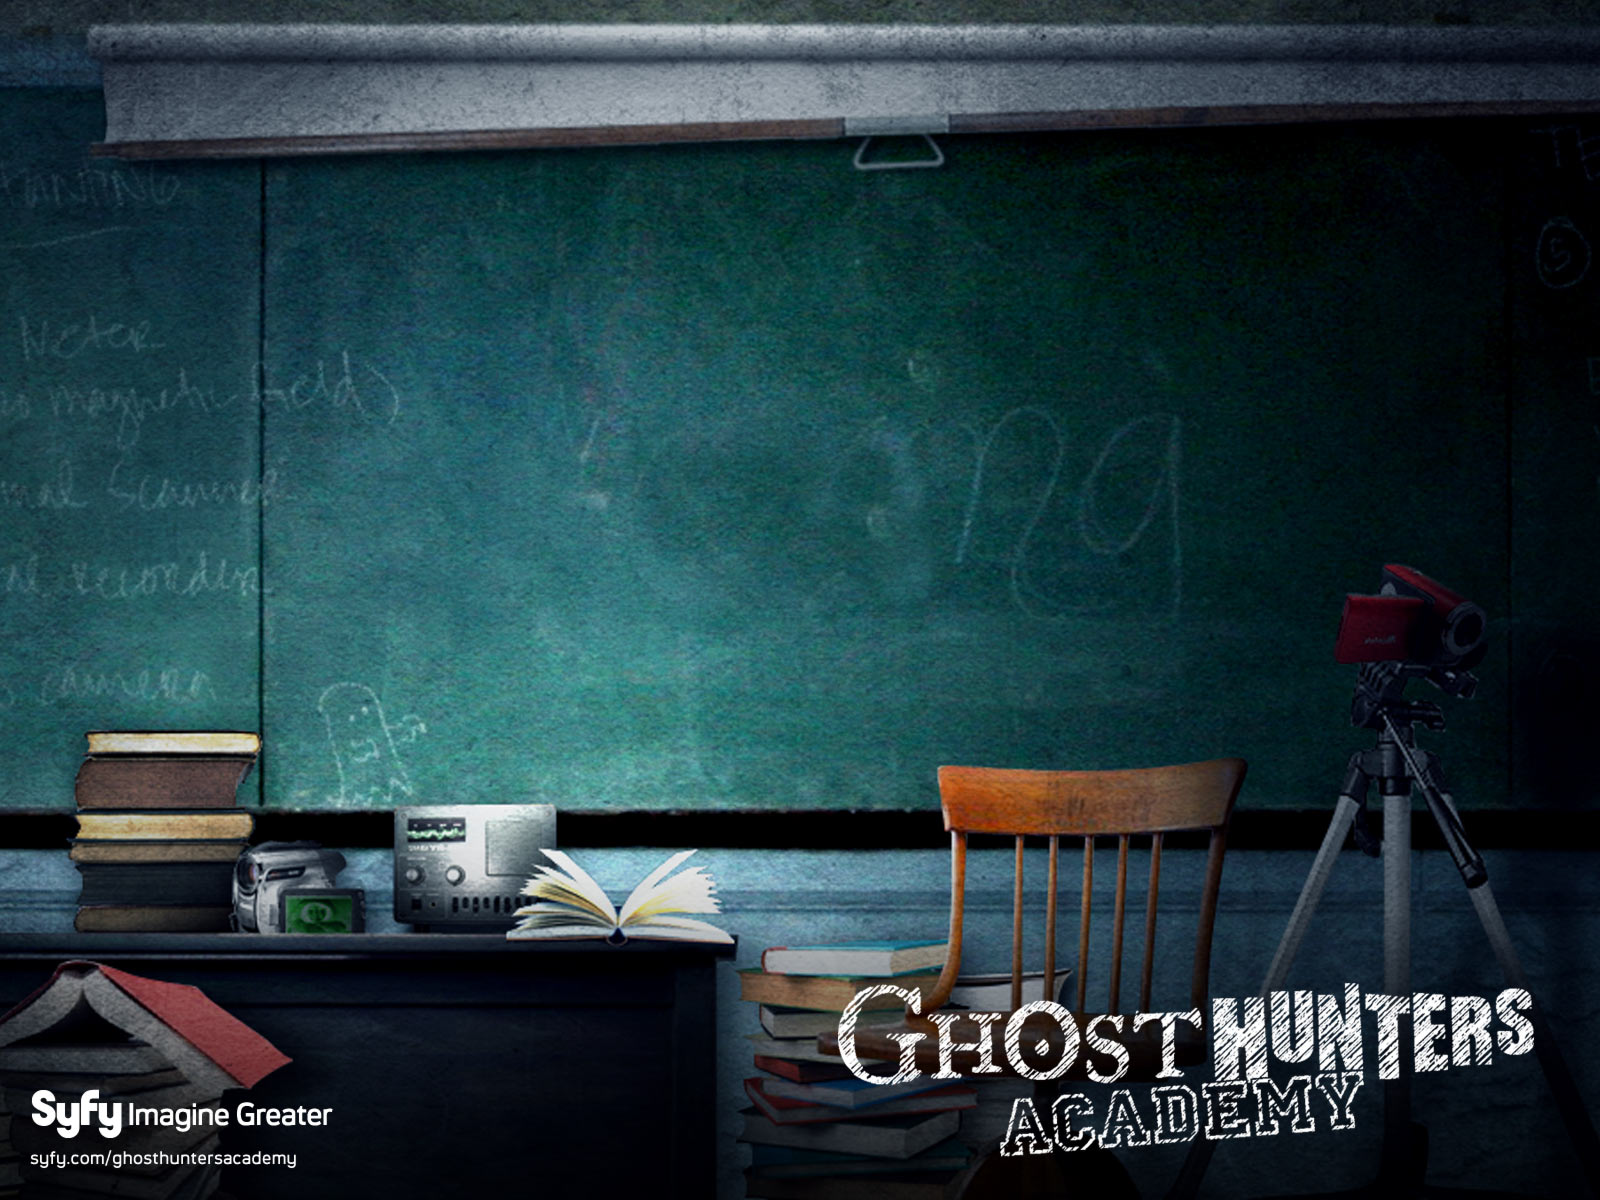 Ghost Hunters Academy Wallpaper Desktop